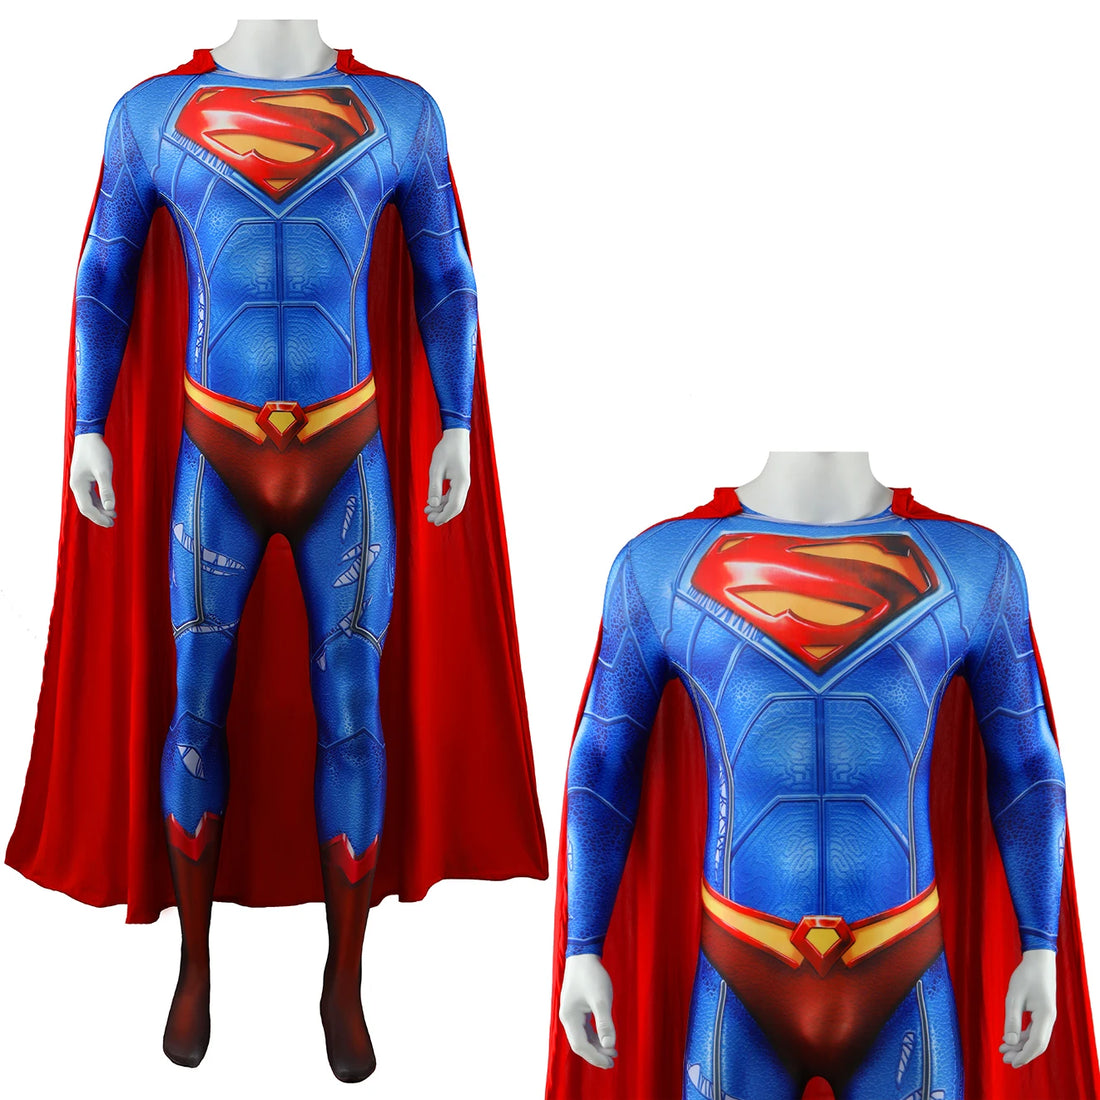 Suicide Squad SuperMan Cosplay Superhero 3D Printed Zentai Bodysuit Superman Clark Kent Spandex Outfit Cosplay Halloween Costume